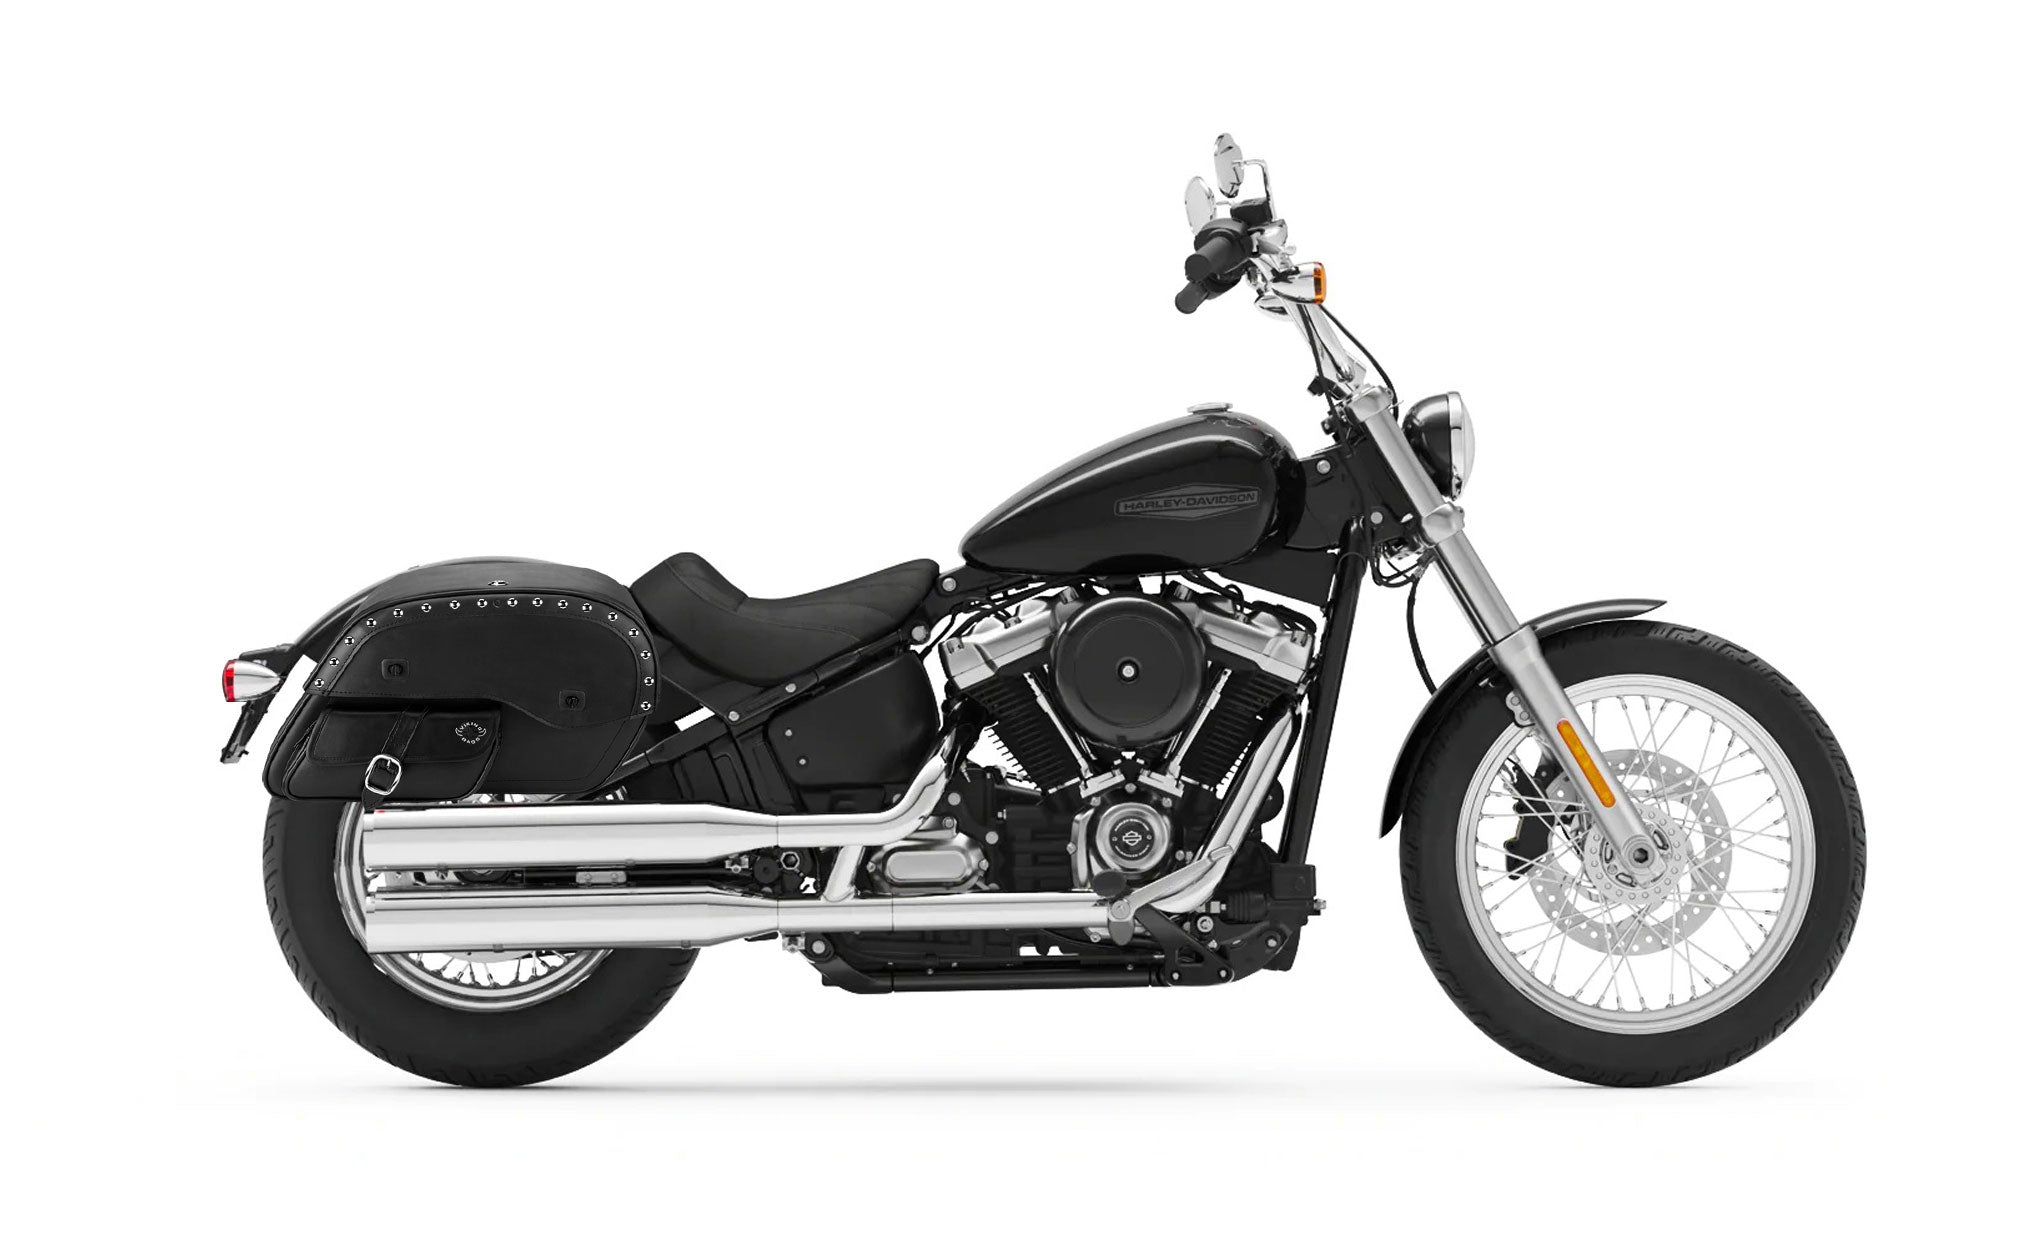 Viking Side Pocket Large Studded Leather Motorcycle Saddlebags for Harley Softail Standard FXST/I Bag on Bike View @expand